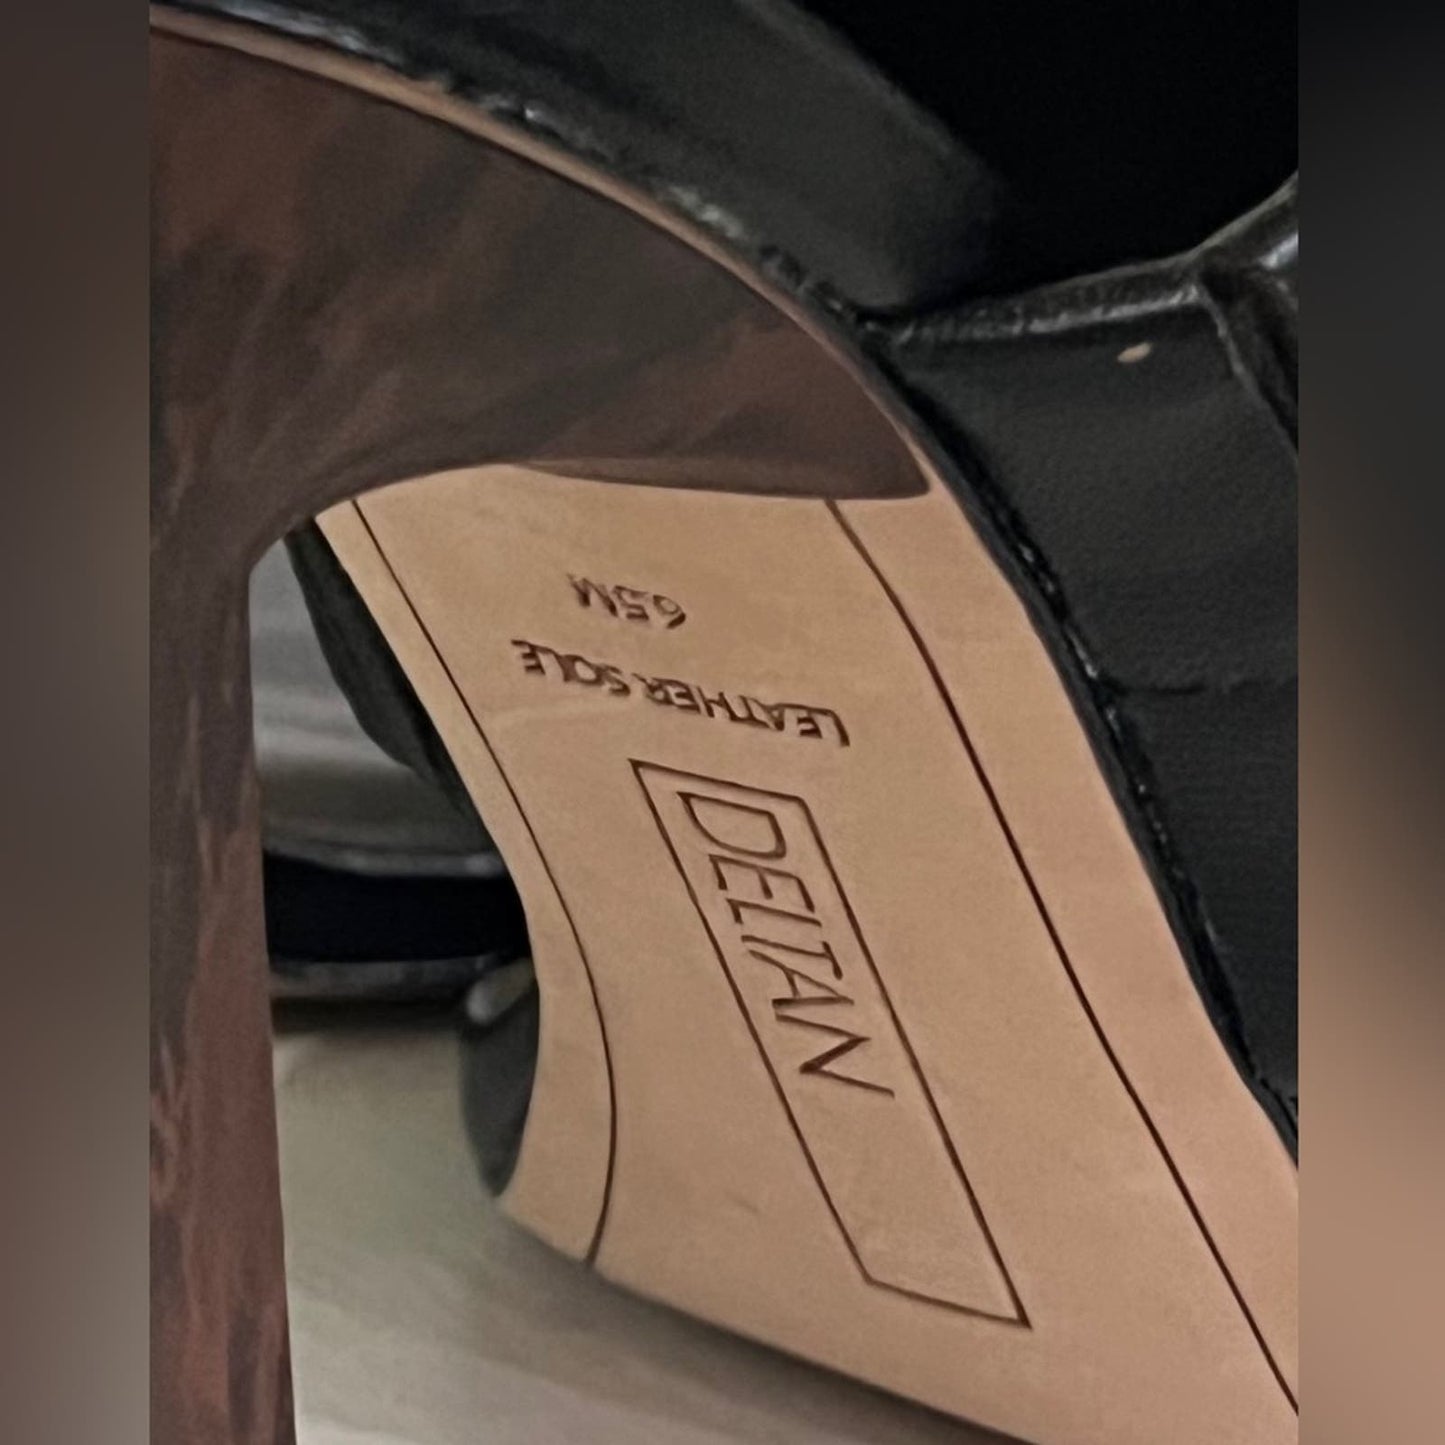 DELTAN Black Leather Sandals w Wooden Heels 6.5